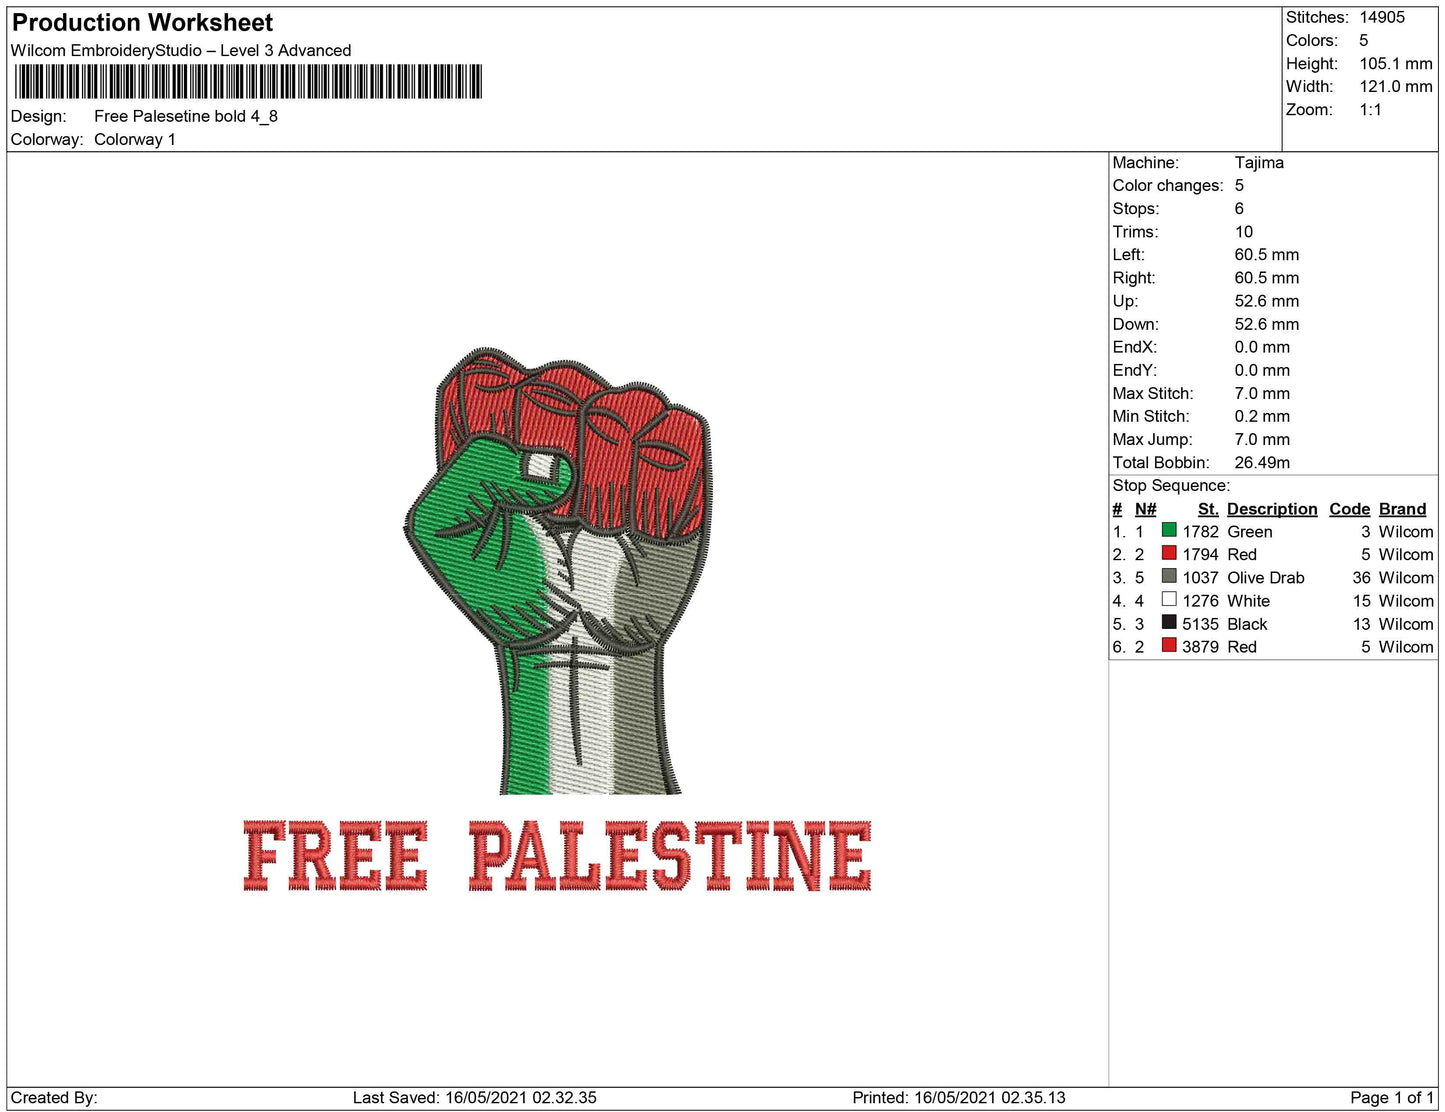 Free Palestine bold